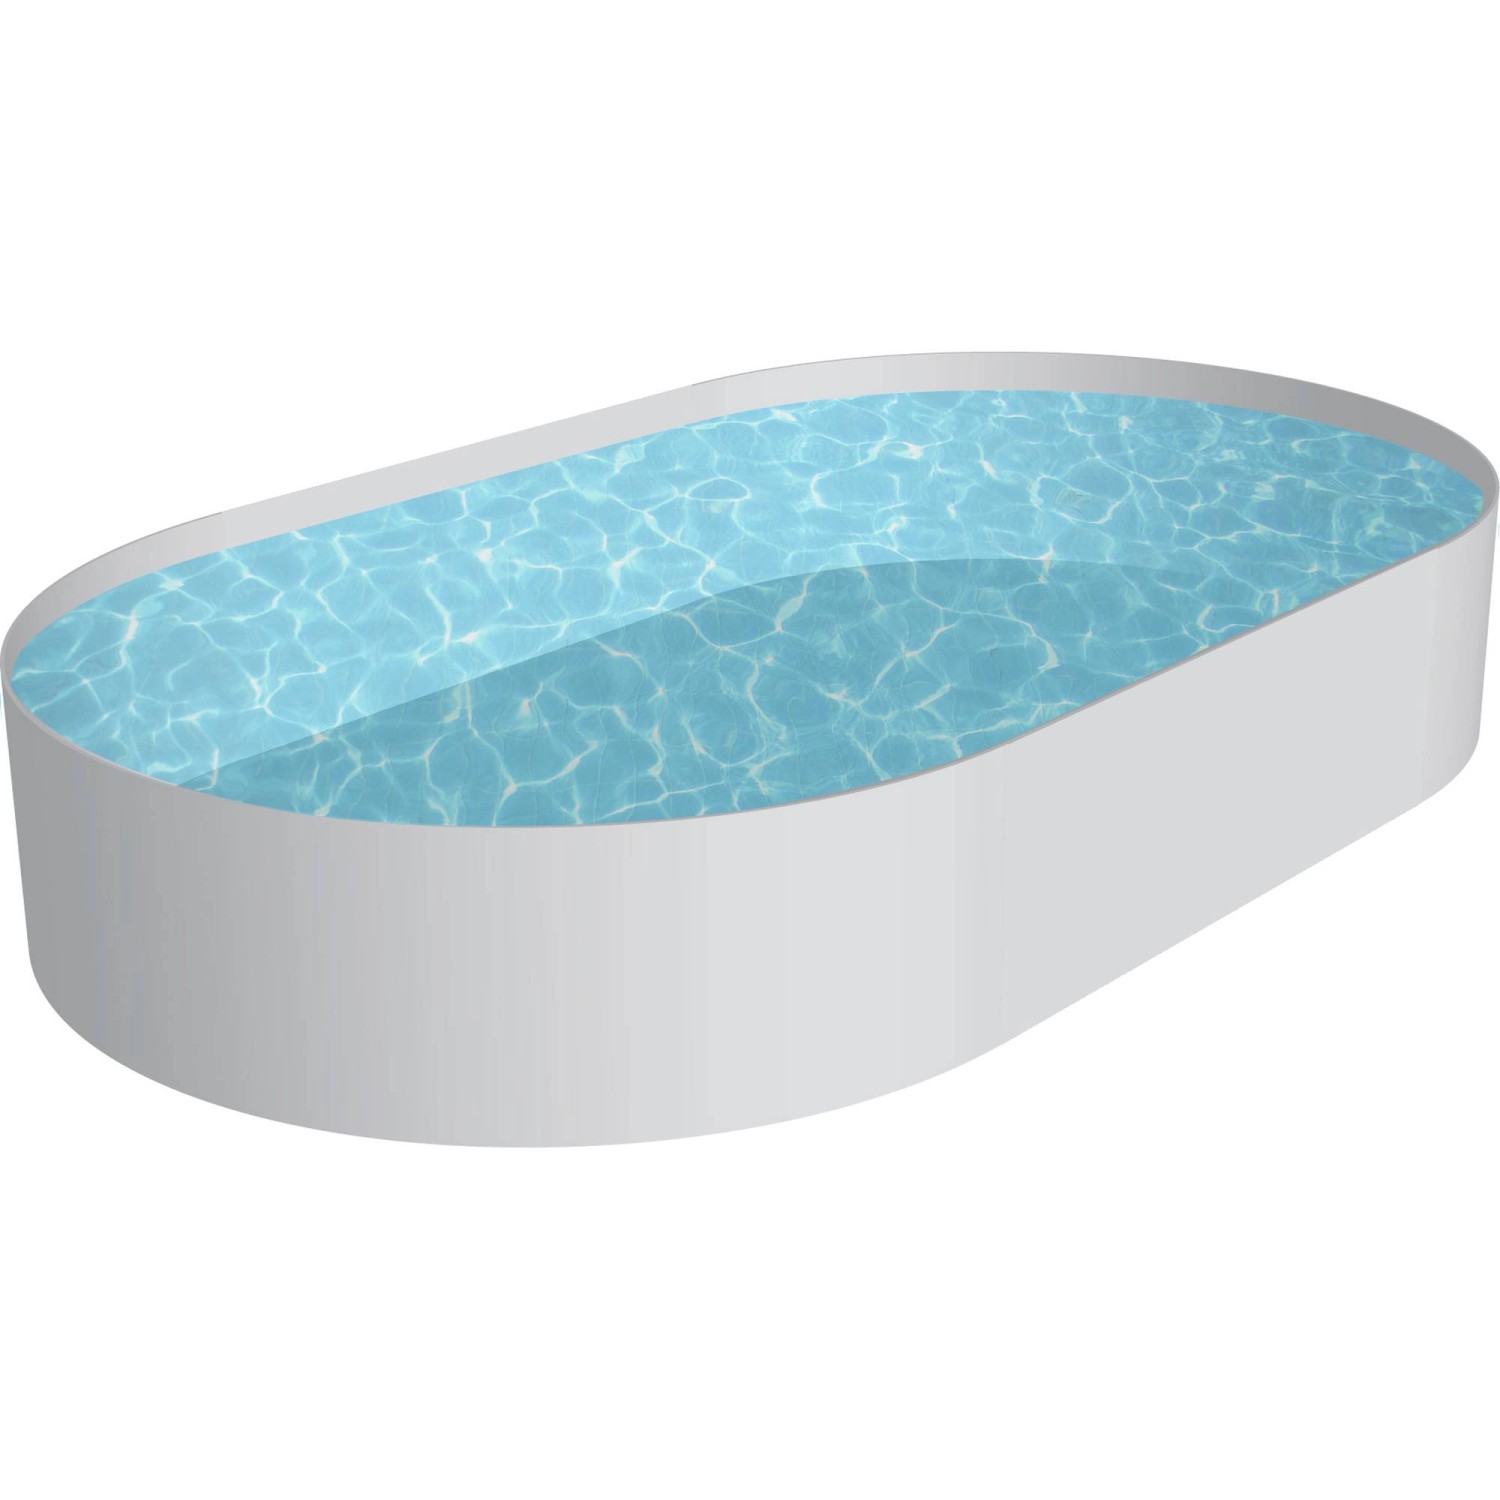 Summer Fun Stahlwand Pool Florida Ovalform 700 cm x 350 cm x 150 cm von Summer Fun